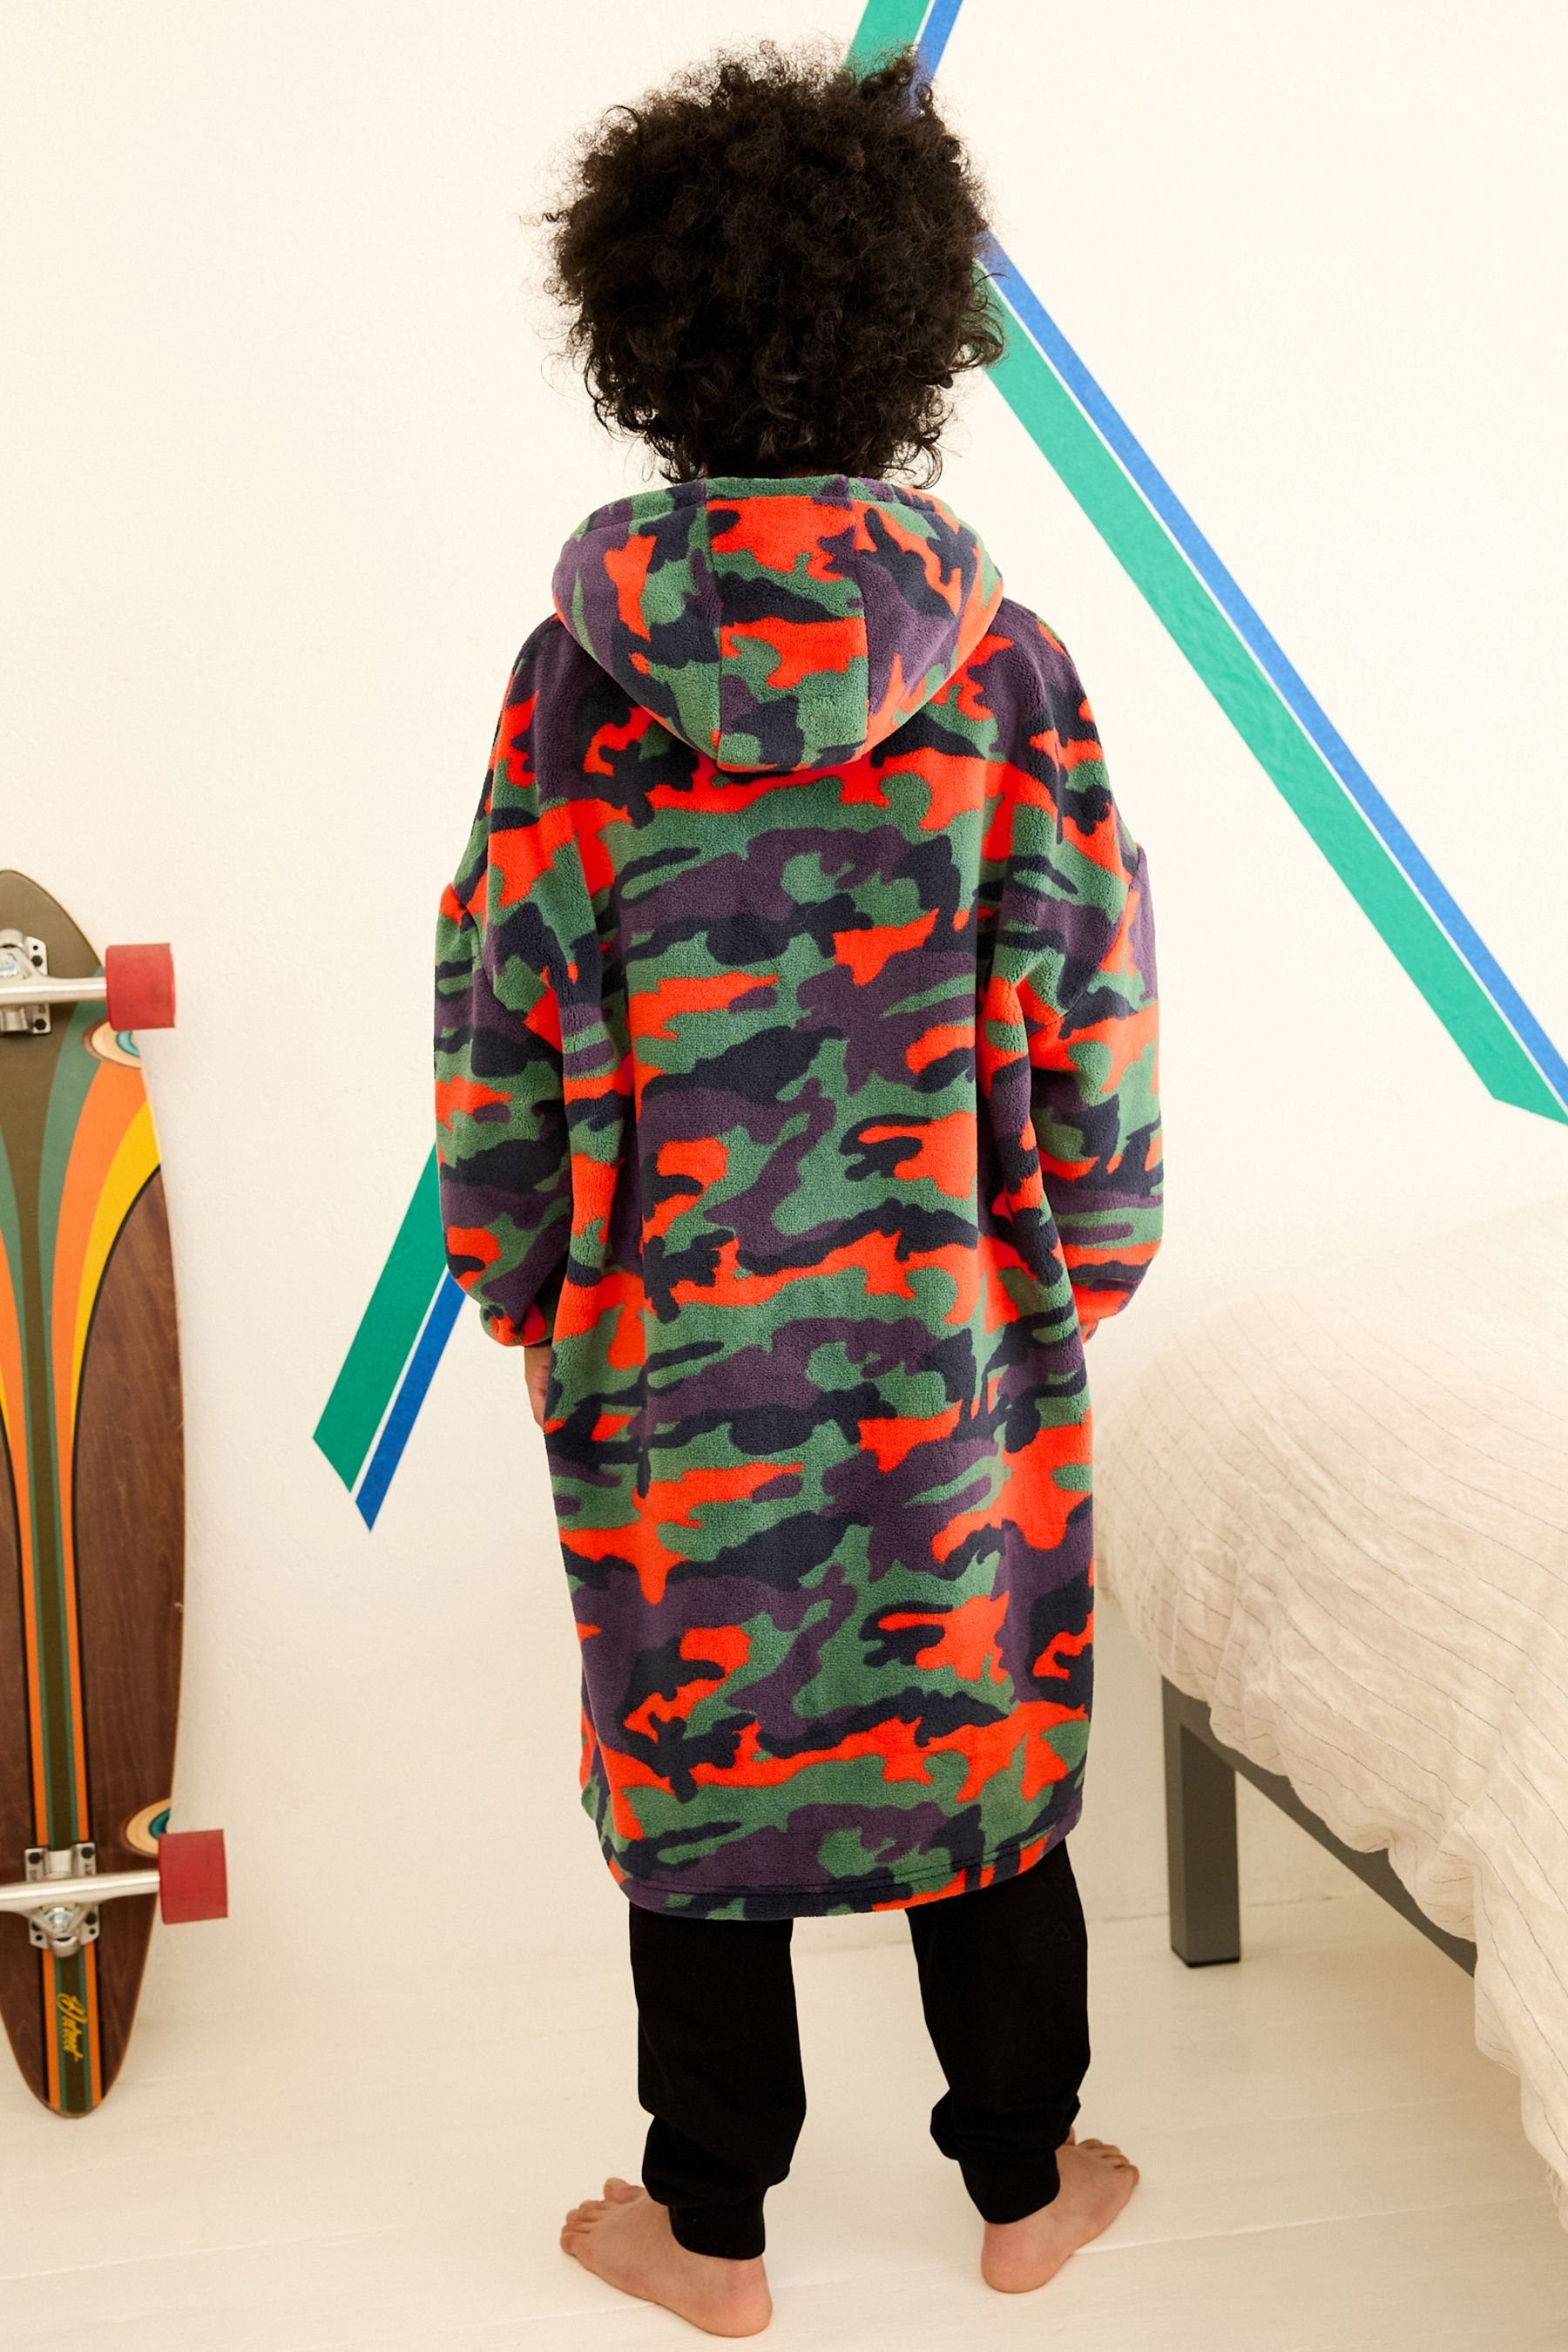 Next Kinderbademantel Decke mit Green Polyester Orange/ Camouflage Kapuze, Polyester (recycelt)